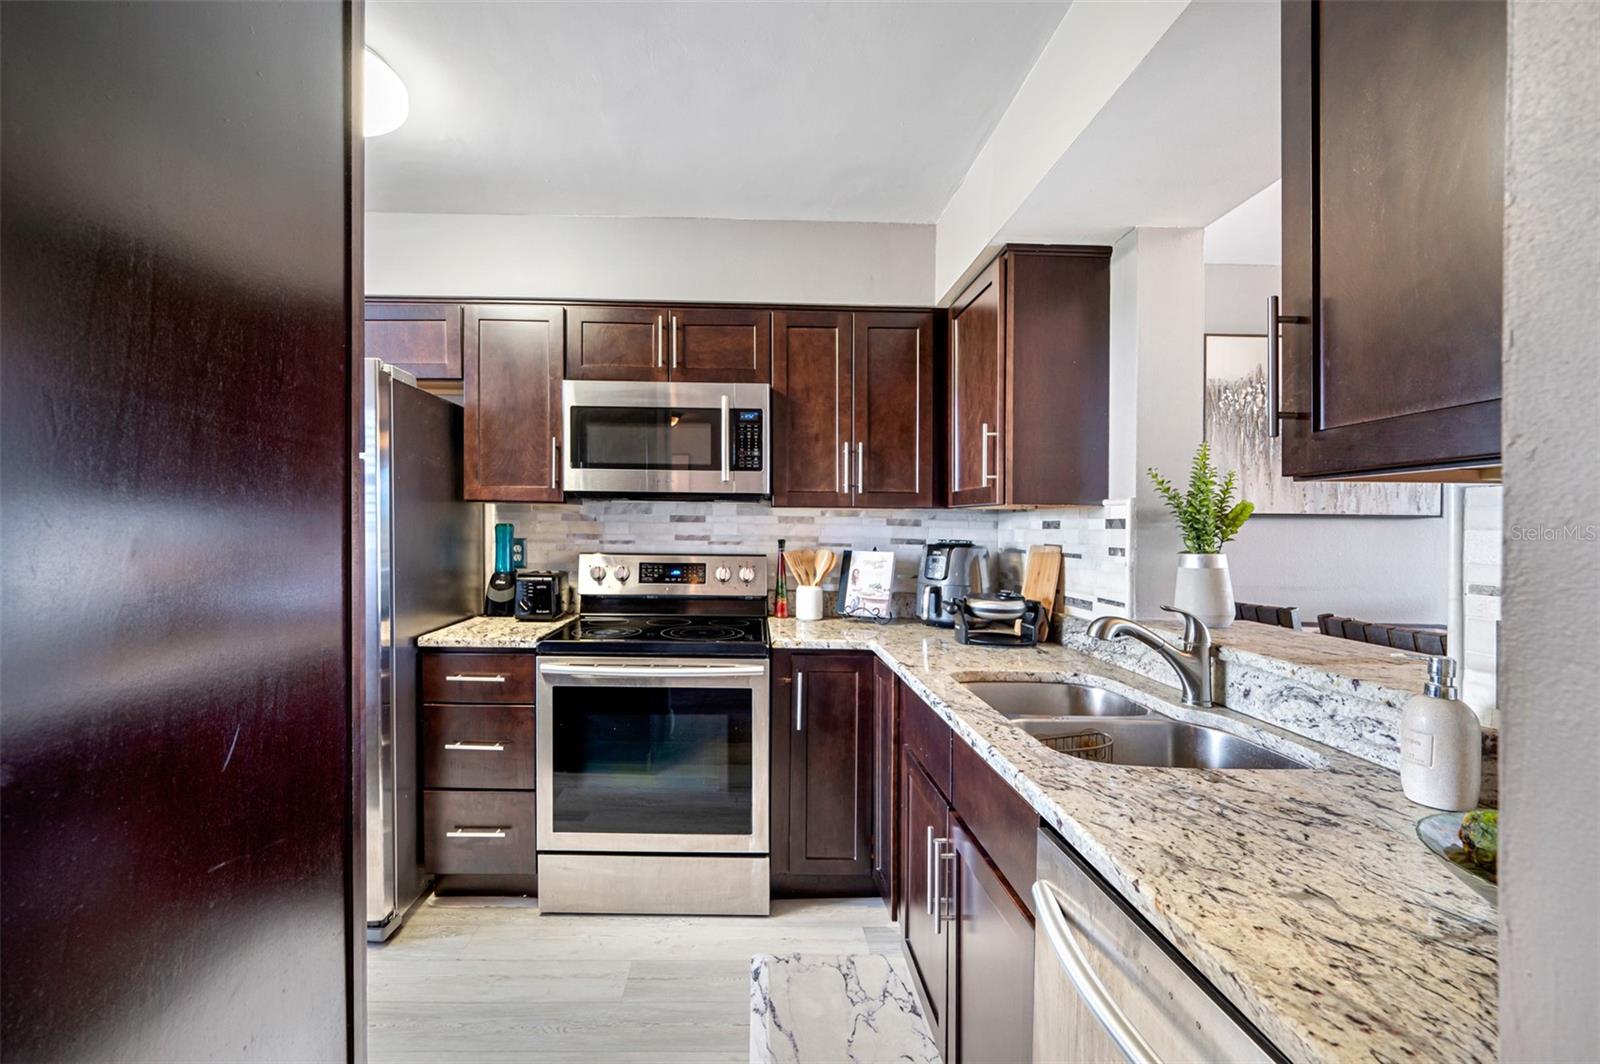 Kitchen with solid wood cabinetry, granite countertops, modern design tile backsplash, and luxury vinyl flooring.